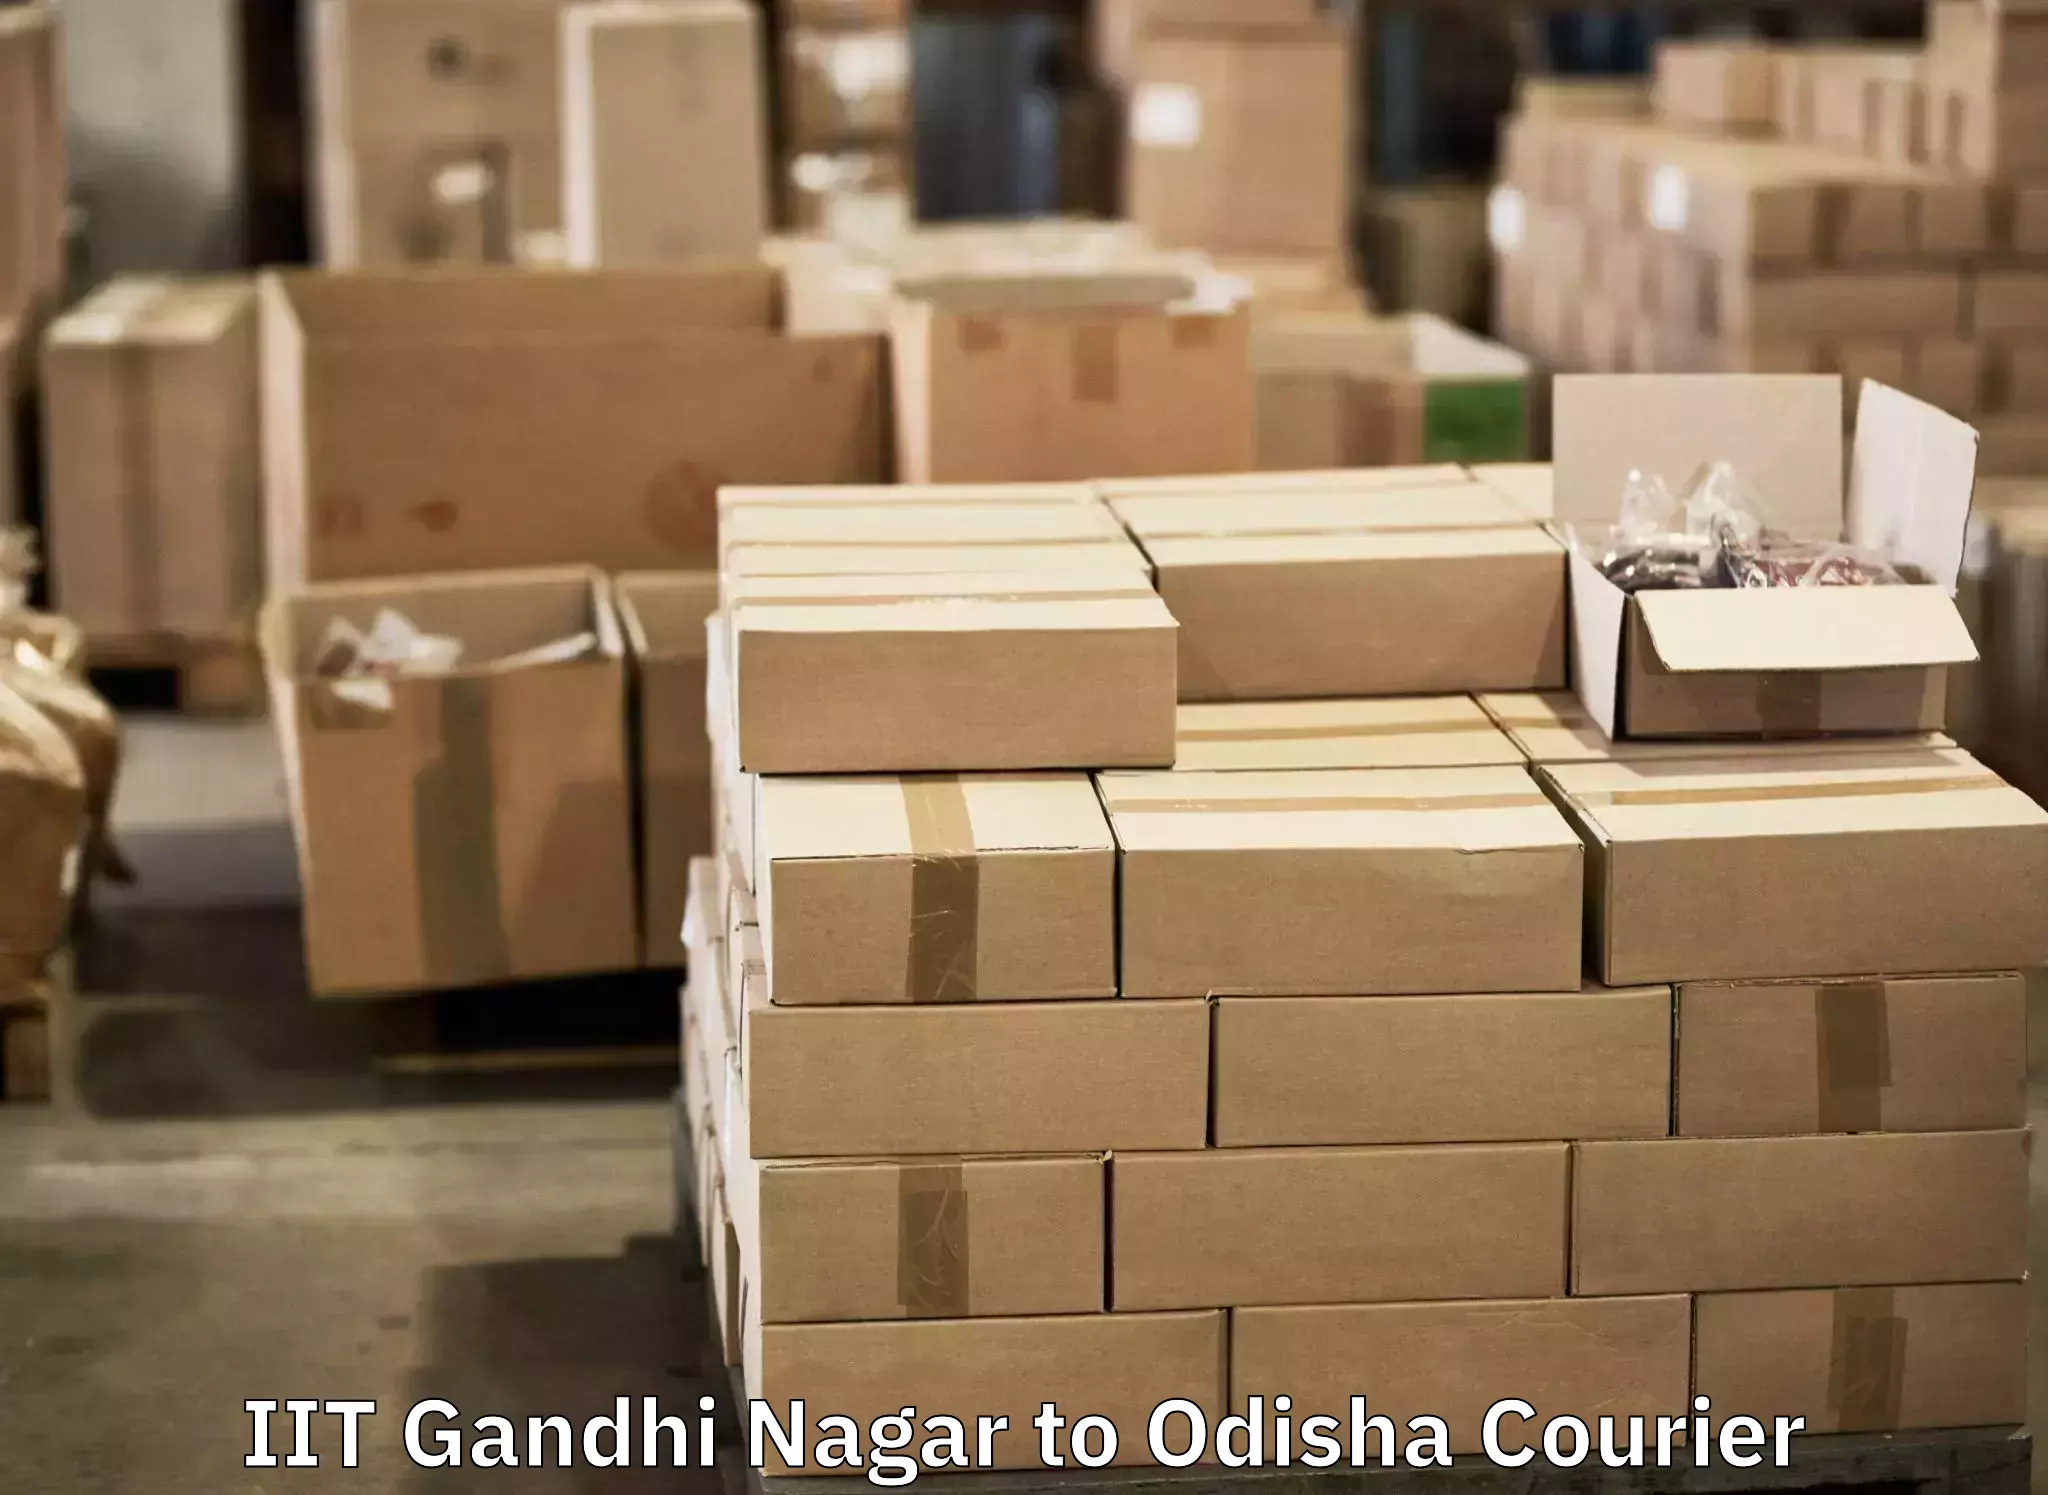 Doorstep luggage collection IIT Gandhi Nagar to Dukura